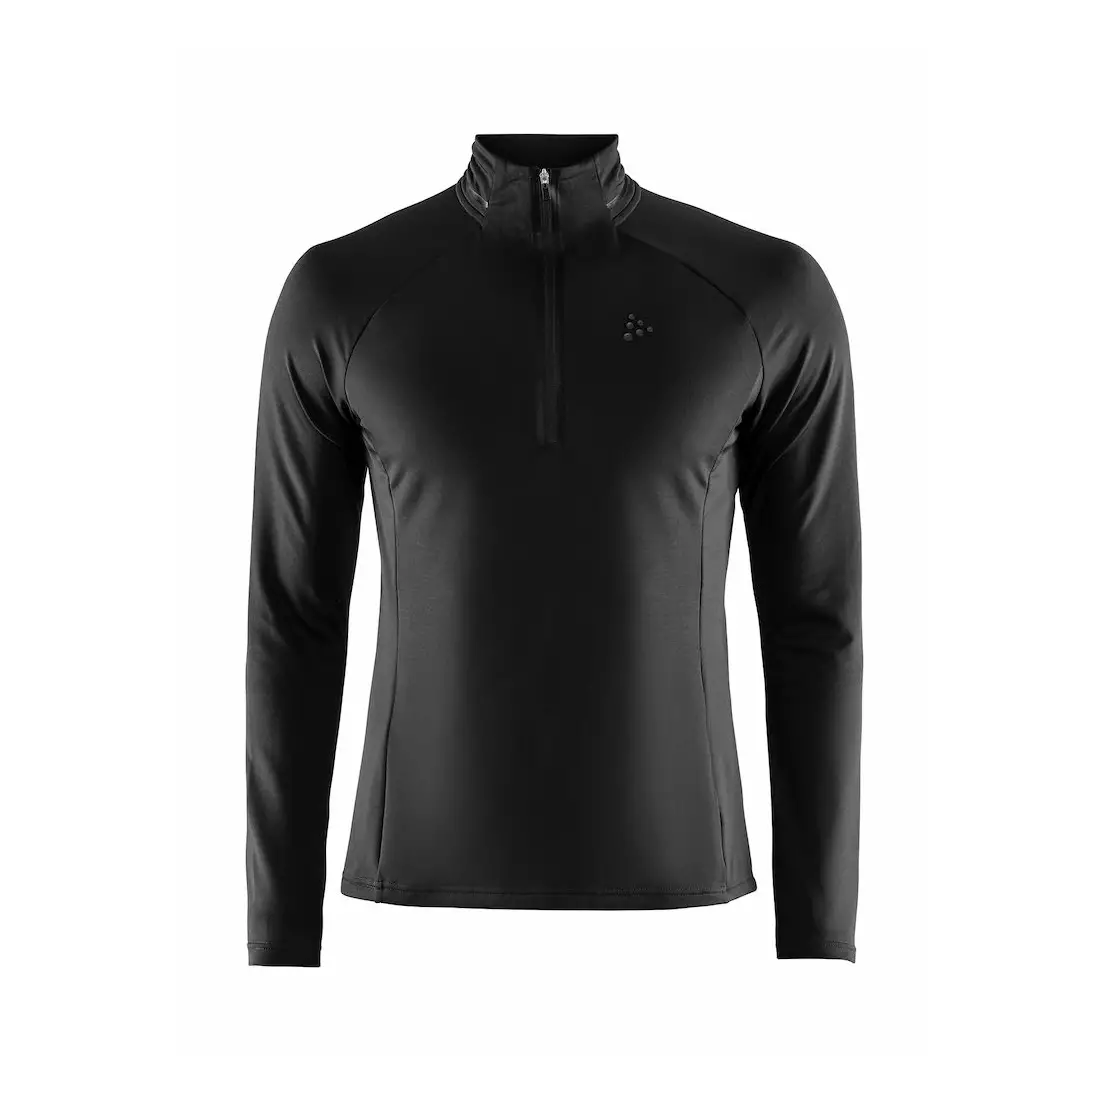 CRAFT HALFZIP men's lightweight sports sweatshirt, black 1906647-999000